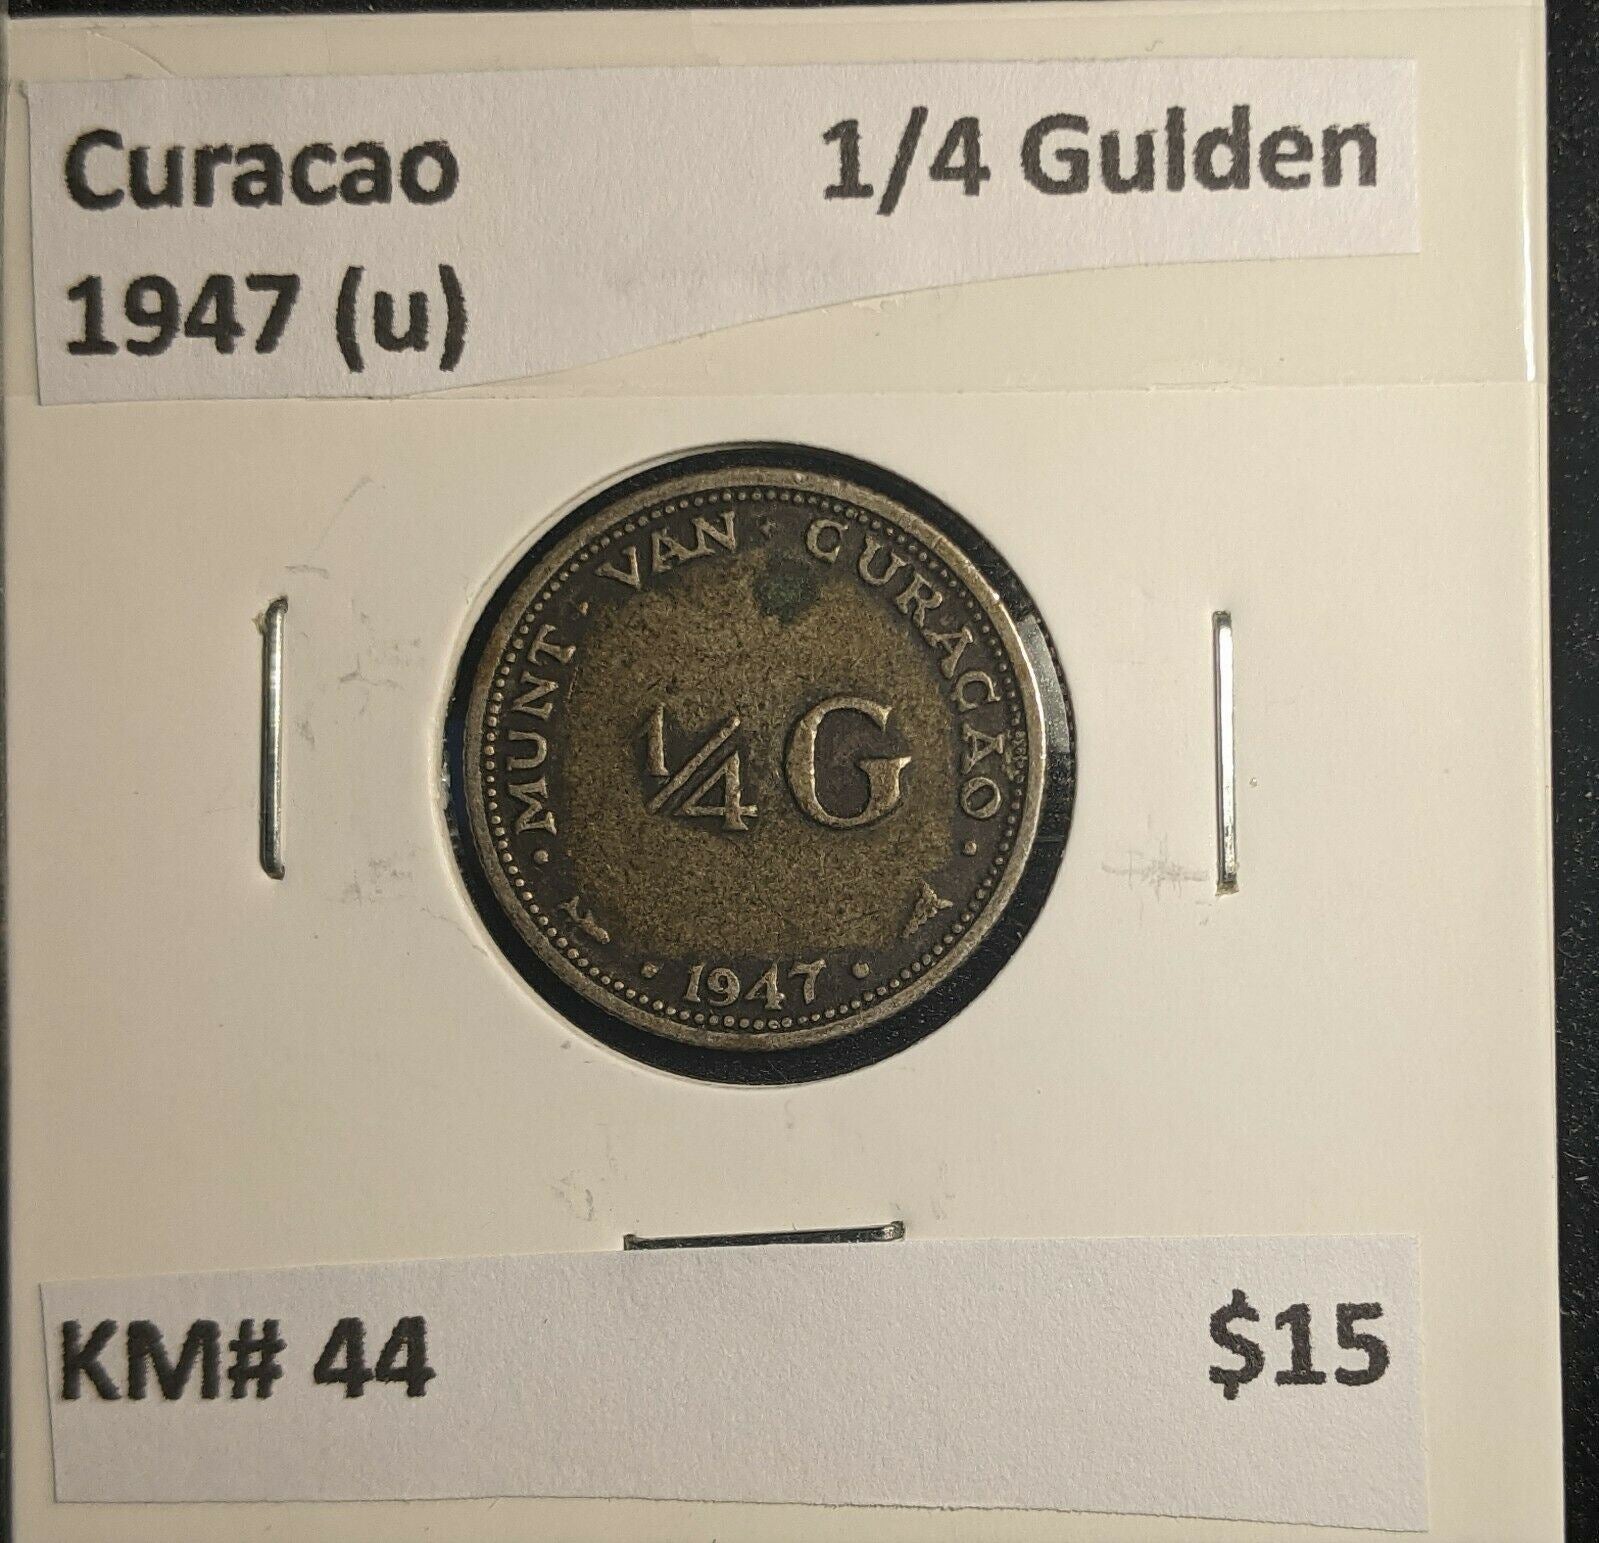 Curacao 1947 (u) 1/4 Gulden KM# 44 #577 6B